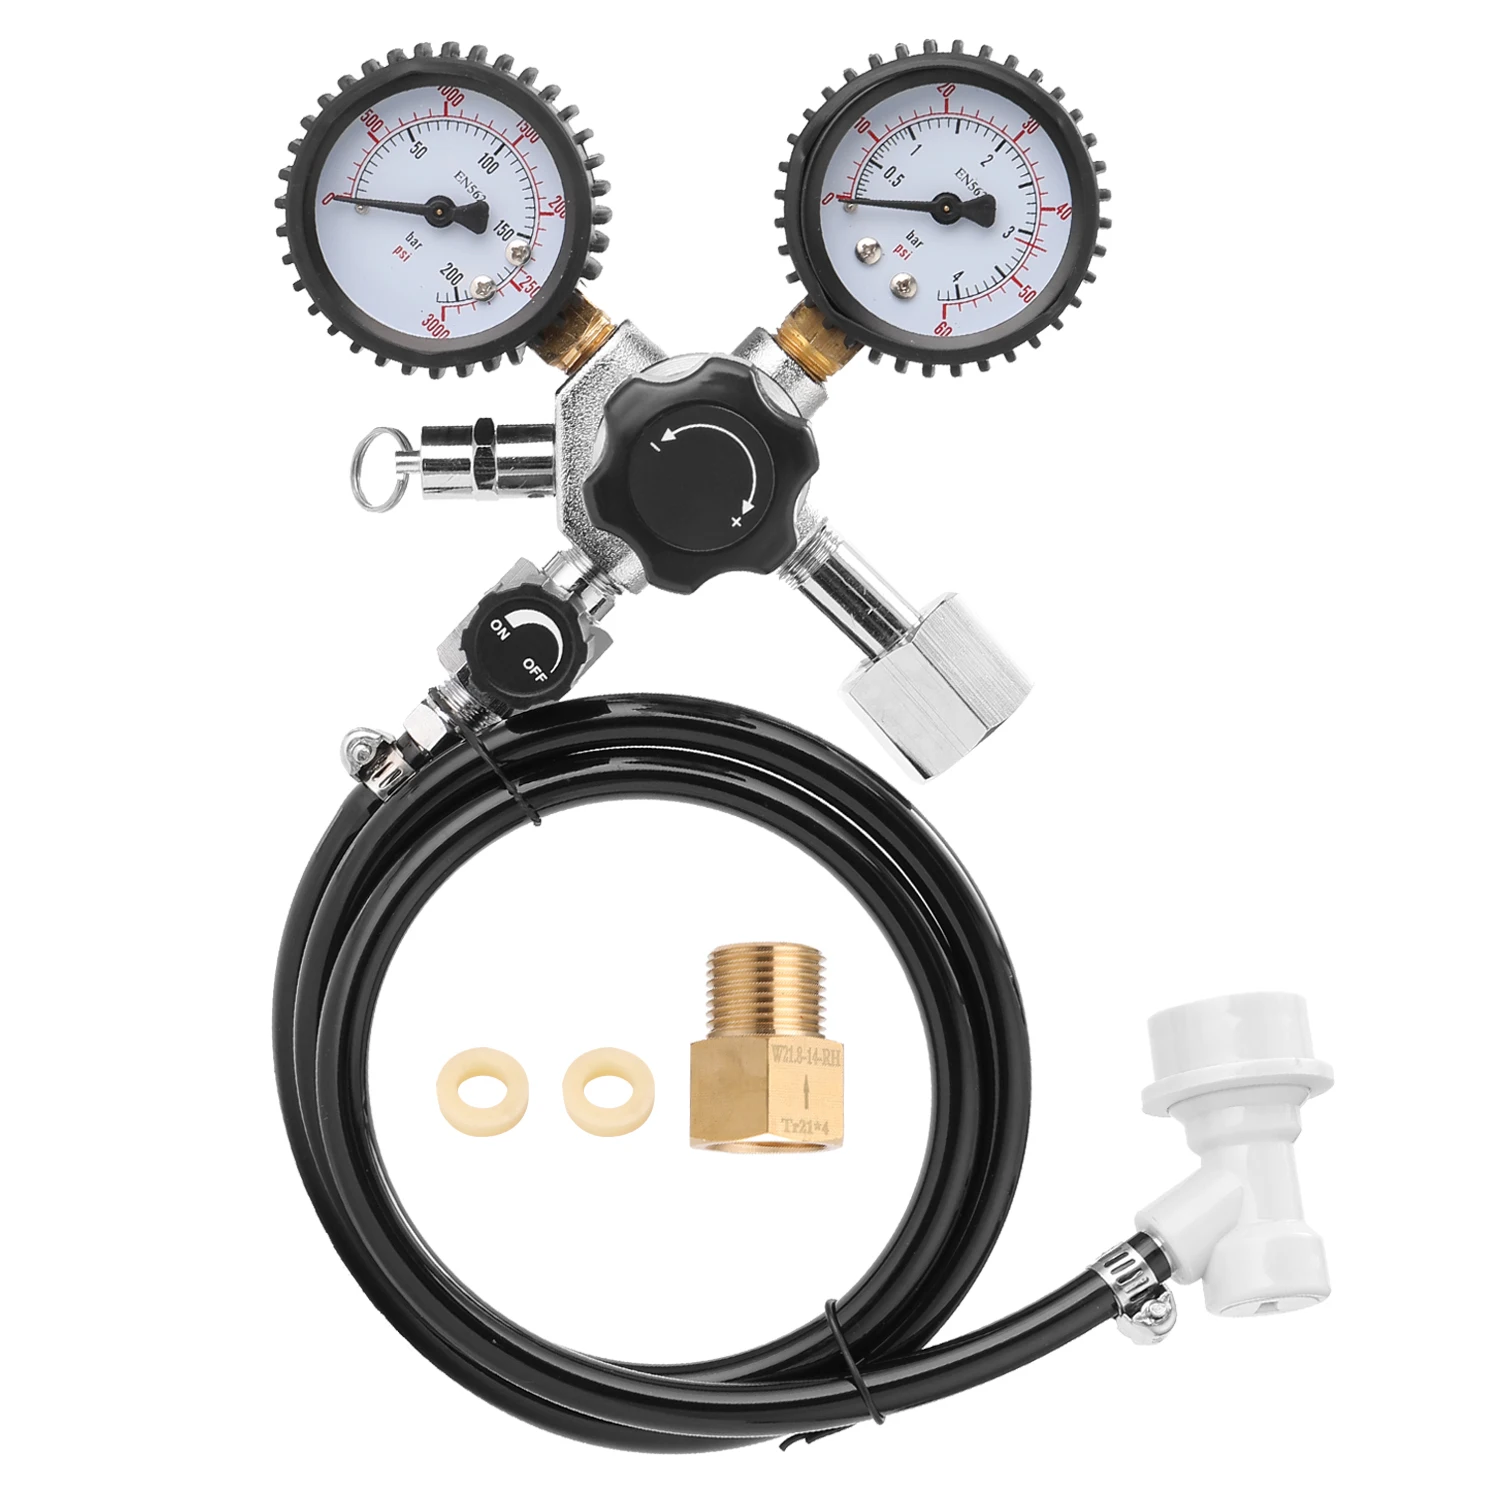 

Portable Double Gauge Beer CO2 Pressure Relief Valve Safety Keg Buck Regulator 0-3000 PSI Tanks Pressure Gauge